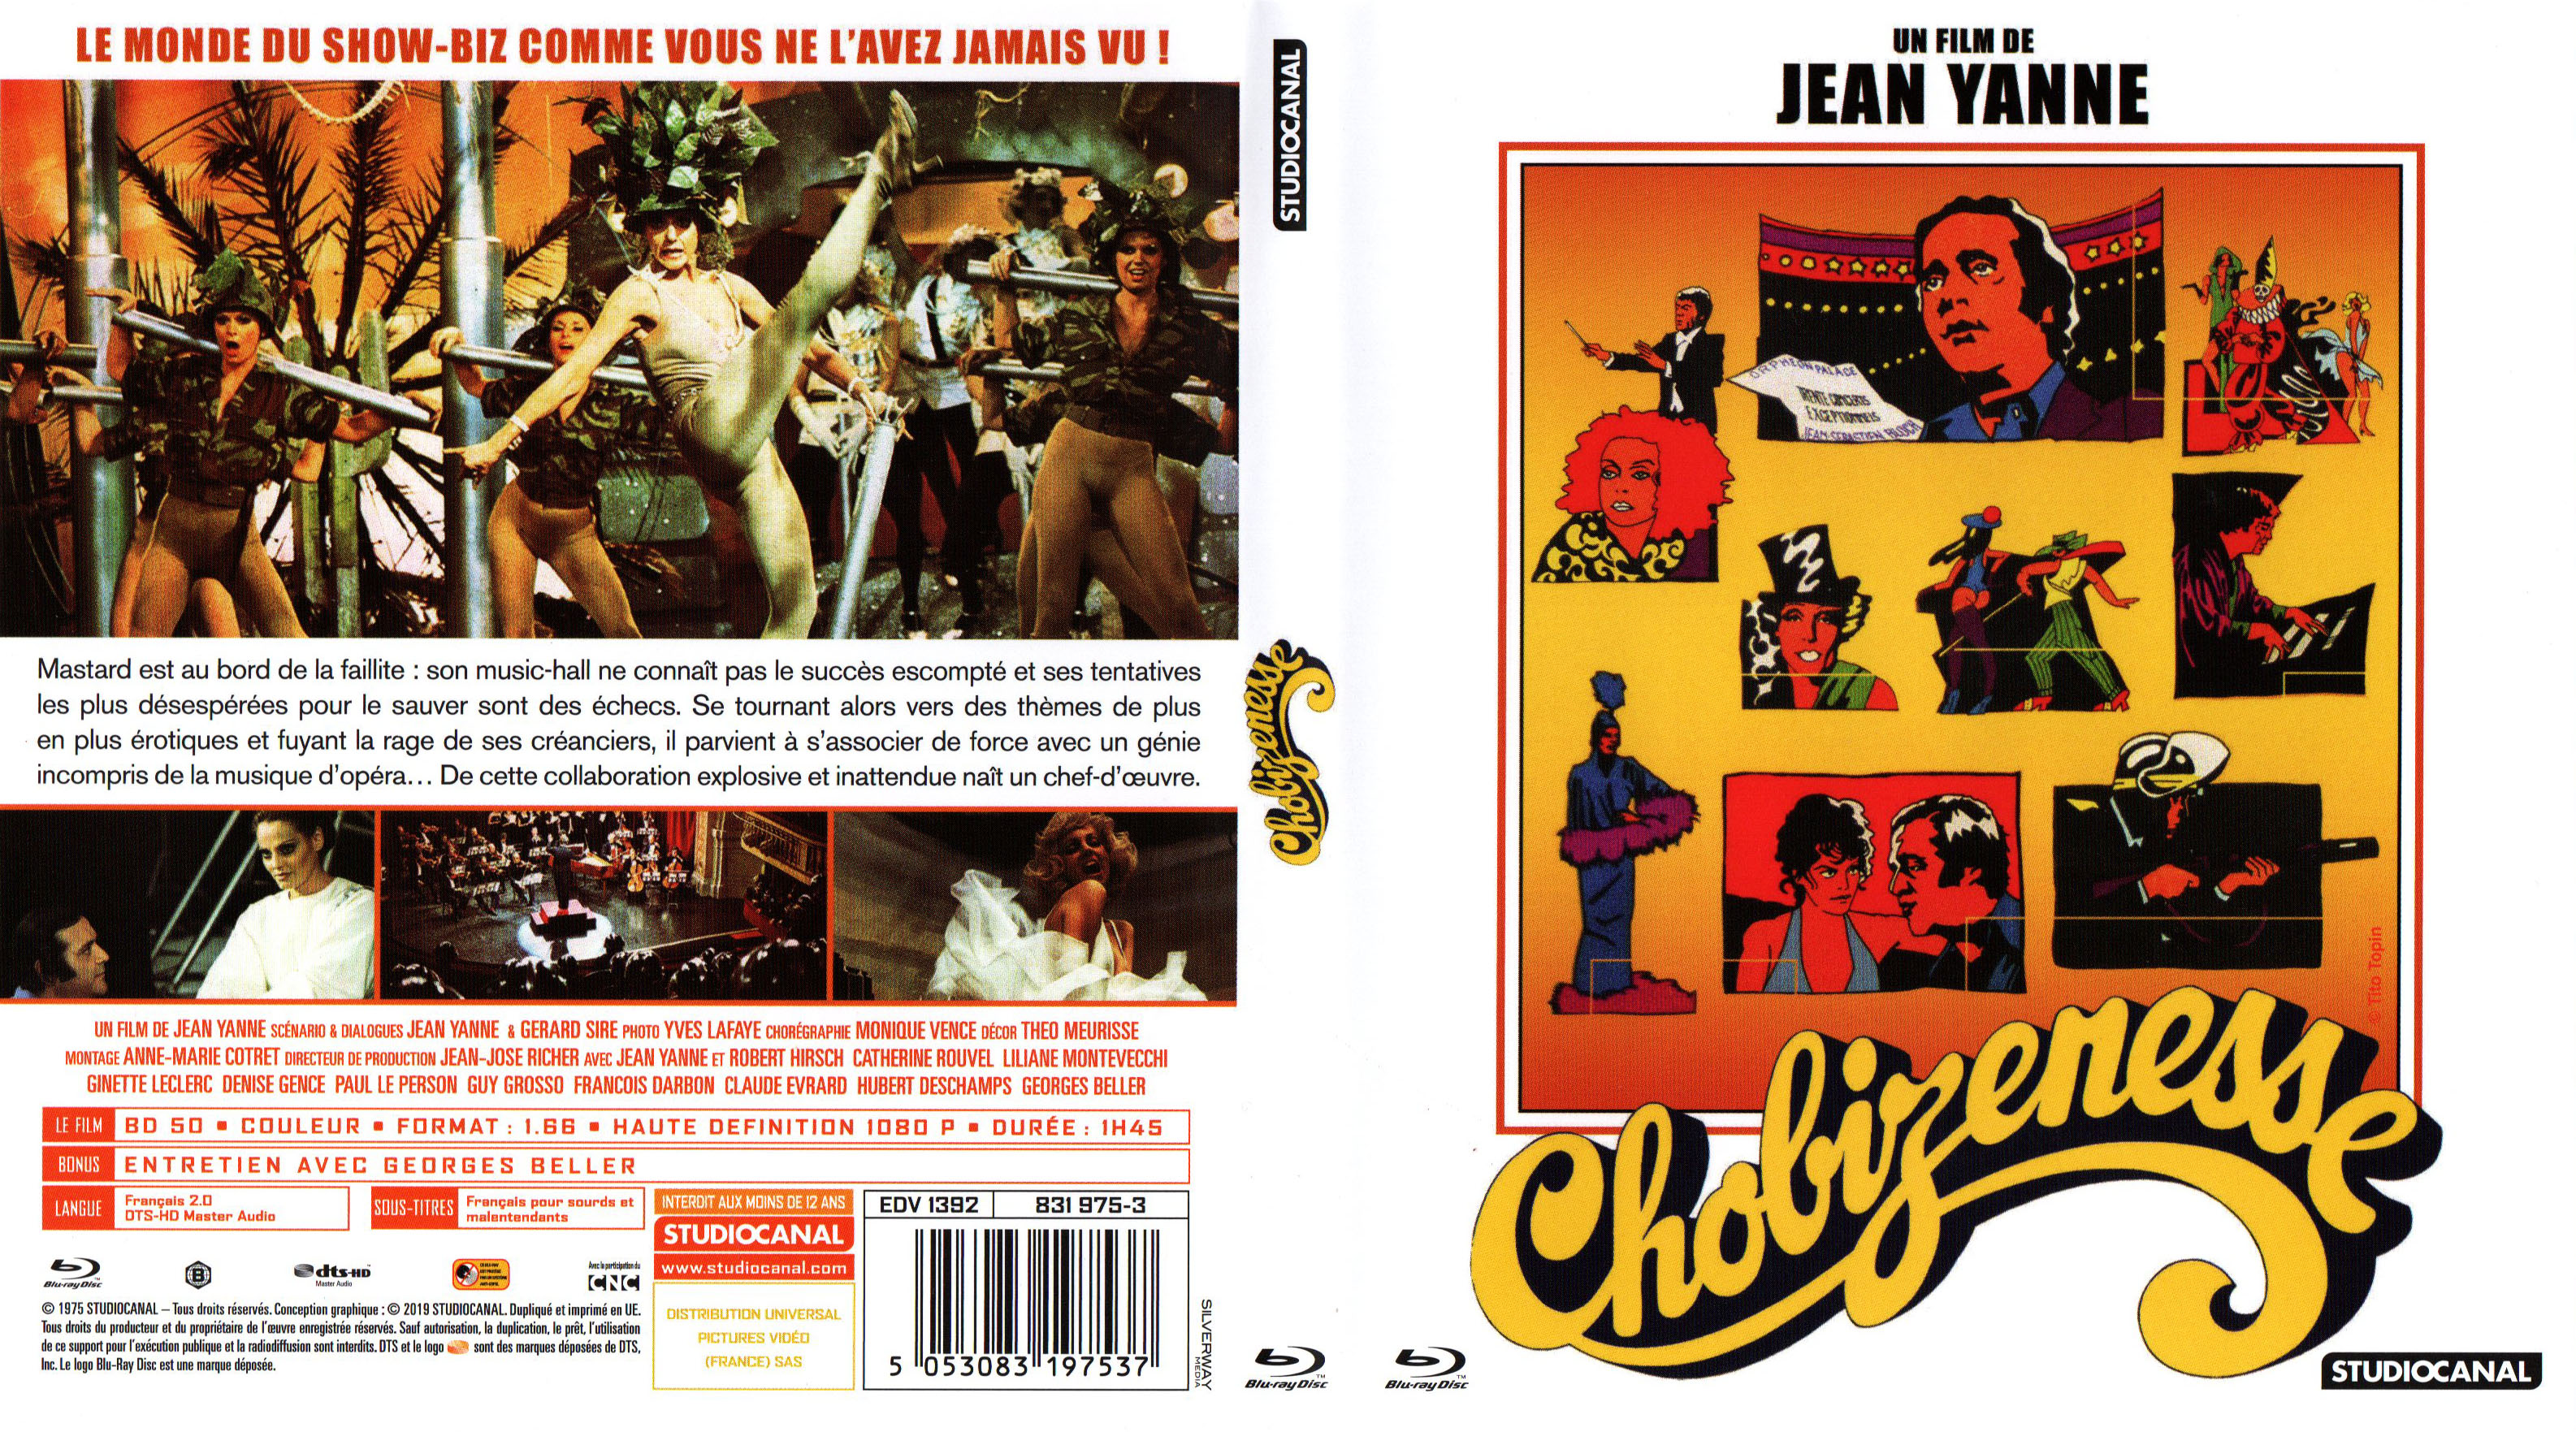 Jaquette DVD Chobizenesse (BLU-RAY)